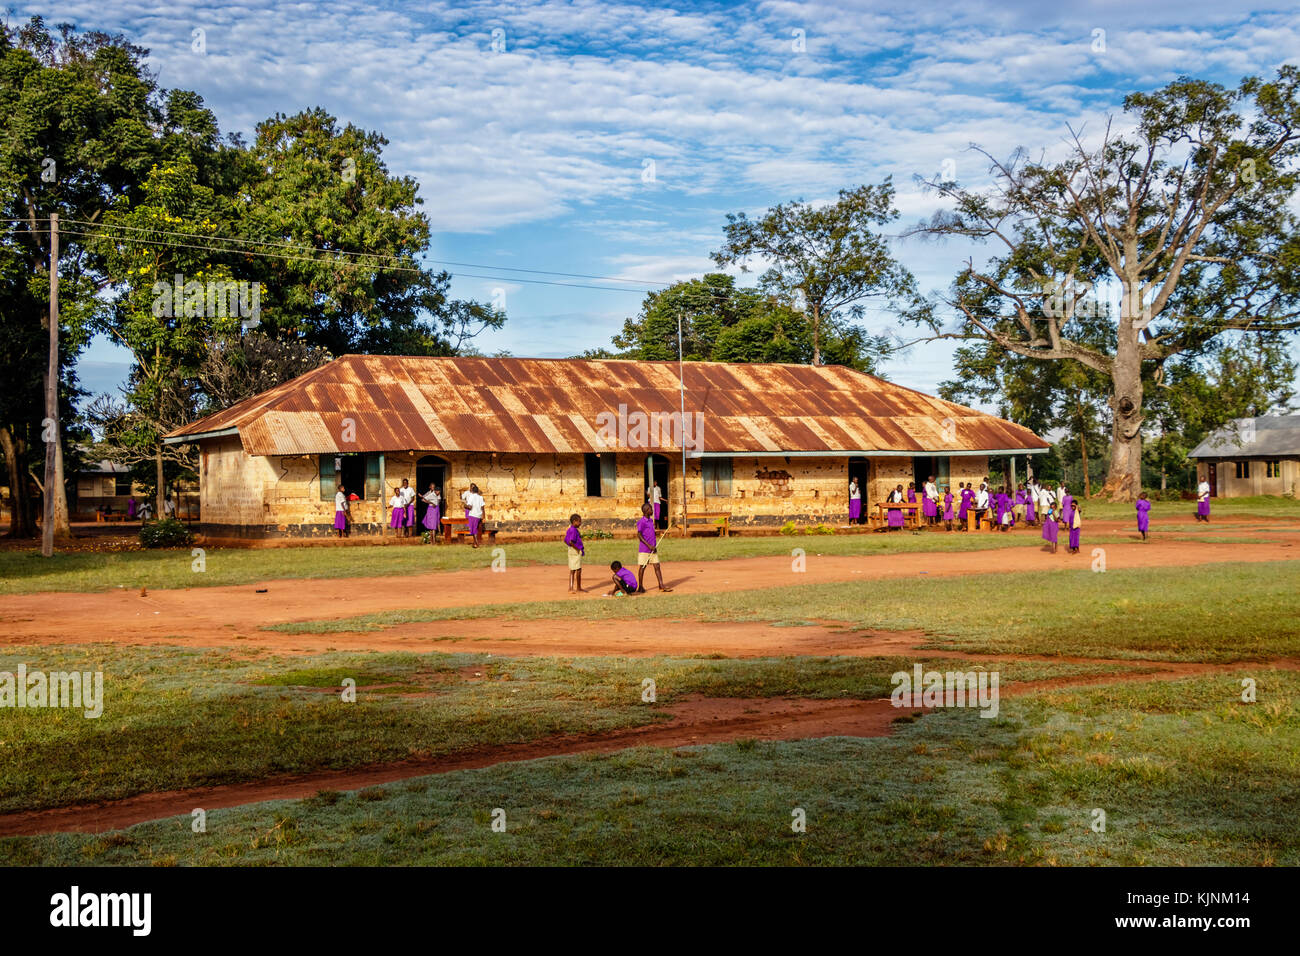 KOLONYI, UGANDA – NOVEMBER 09, 2017: Many students with purple uniform waiting to enter the primary school in Kolonyi near Mbale in Uganda on a beauti Stock Photo